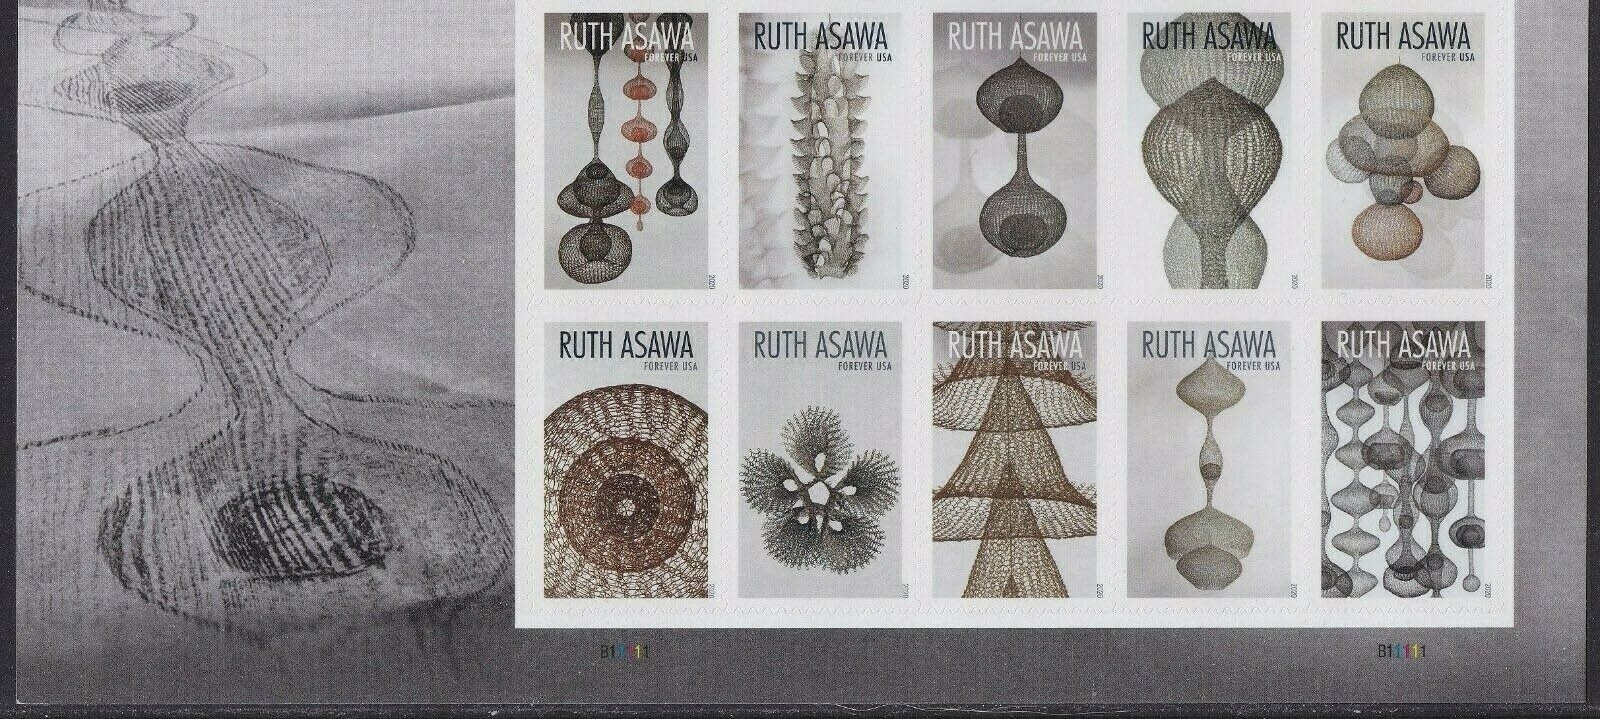 5504-5513  Forever Ruth Asawa Mint Plate Block of 10  #5504-5513pb